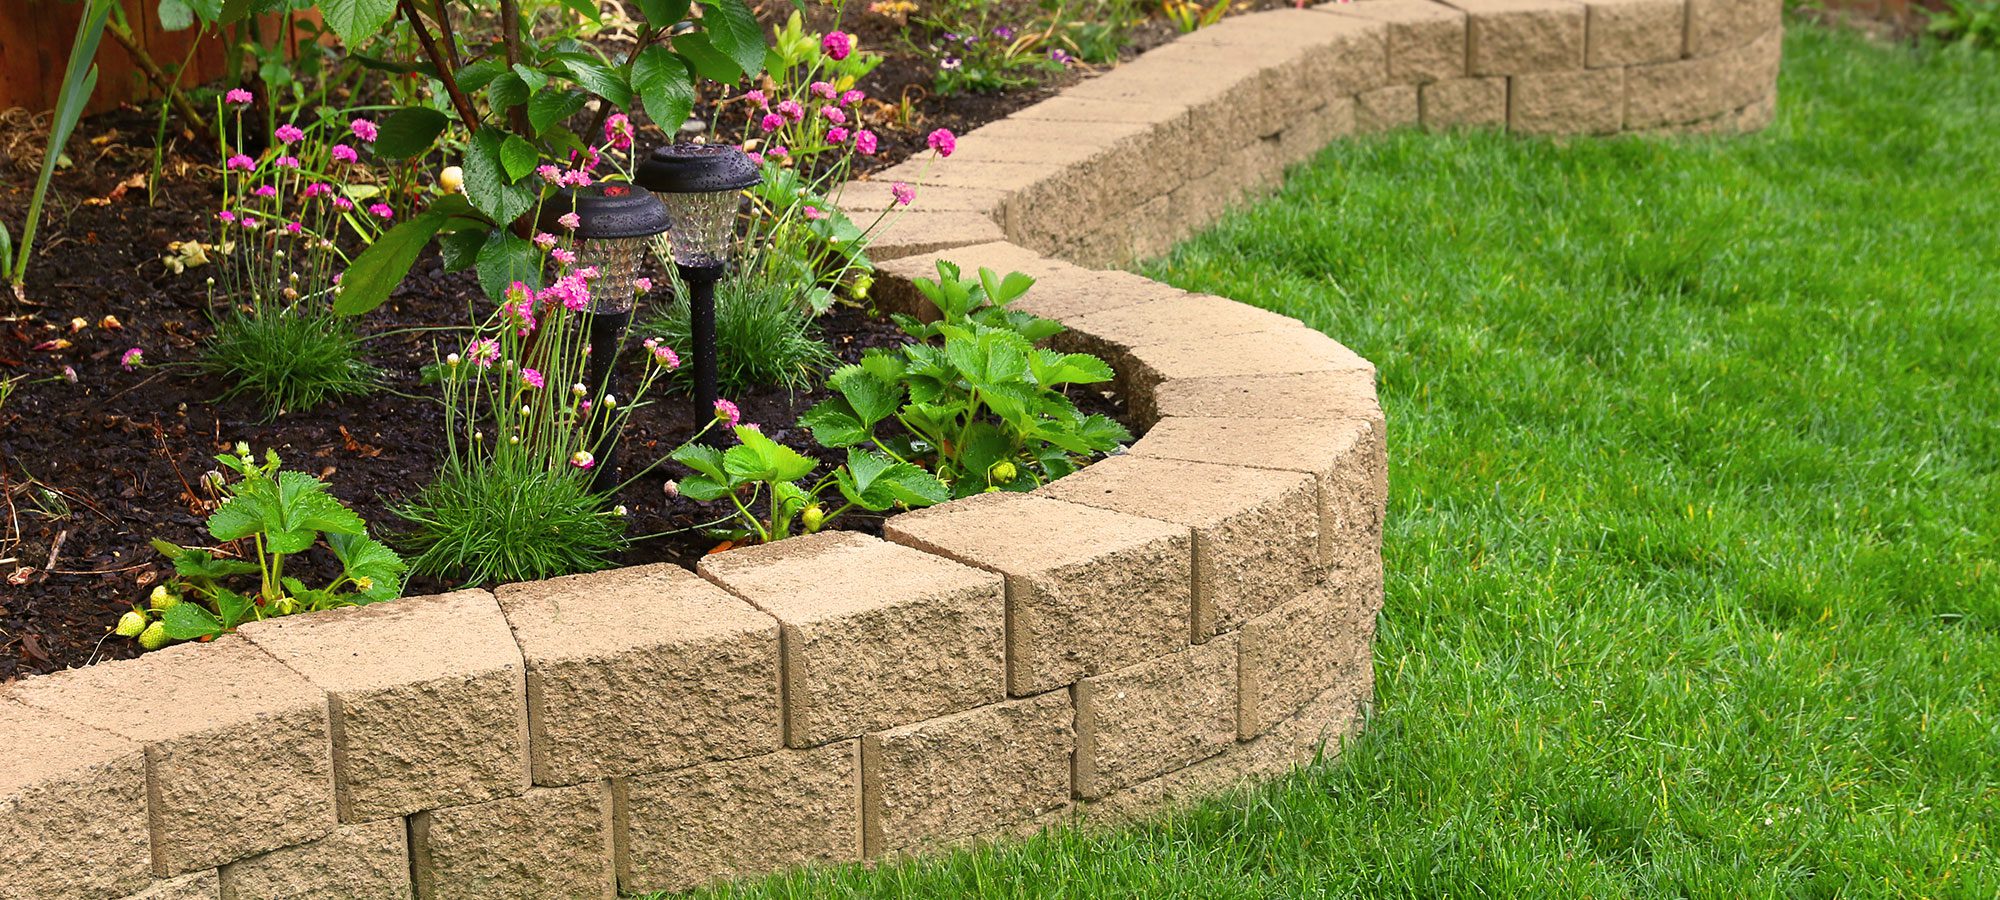 garden edge concrete blocks